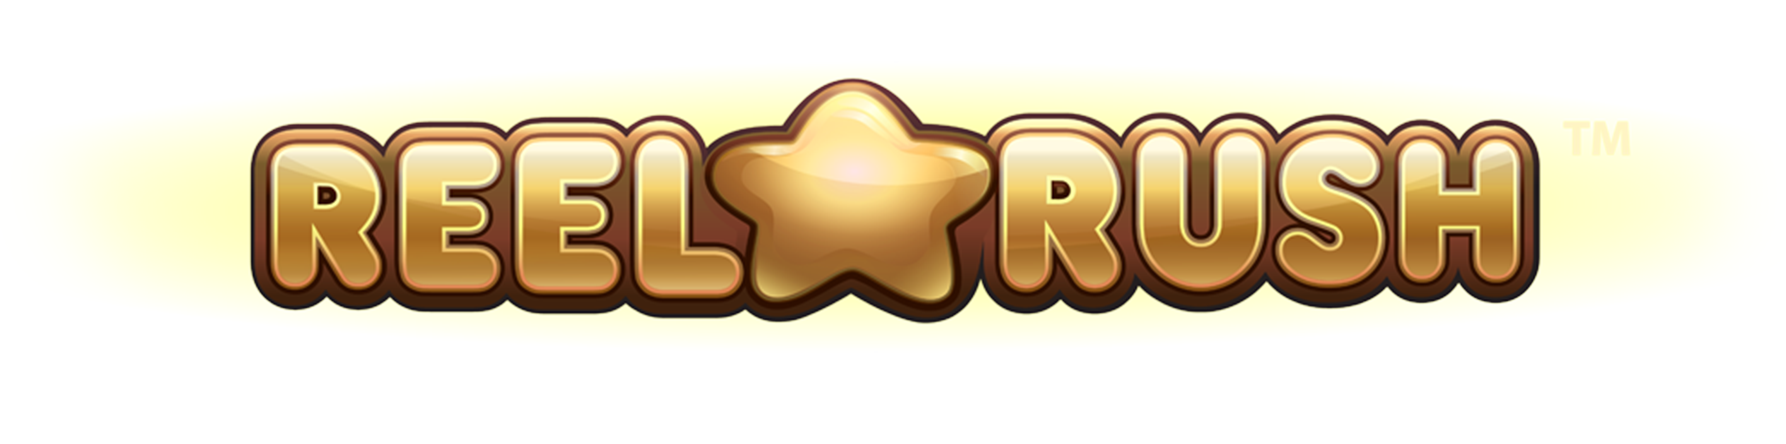 Reel-Rush_logo